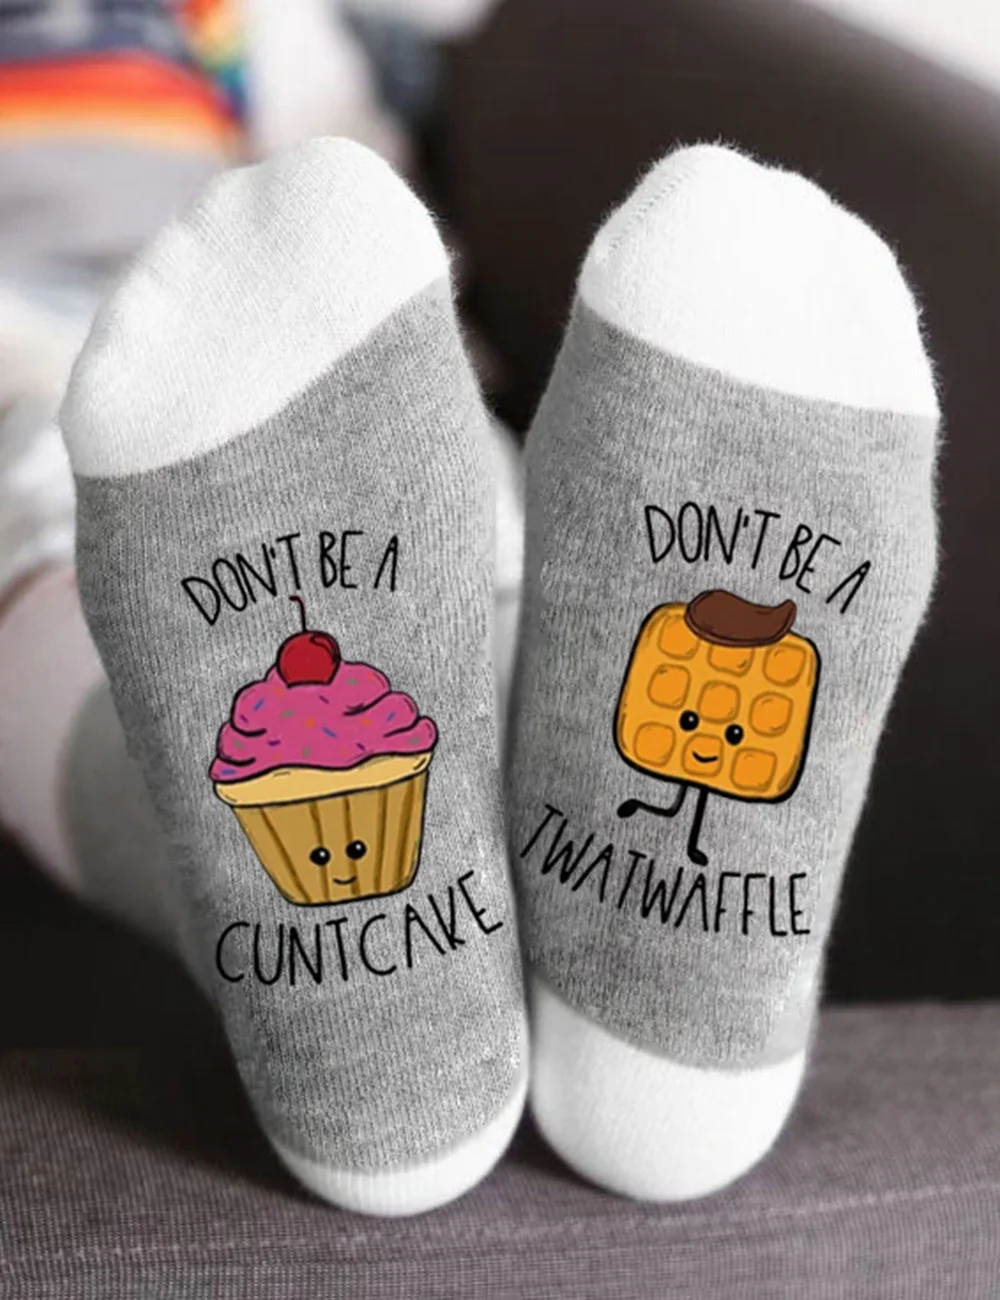 Don't Be A Cuntcake Twatwaffle Socks